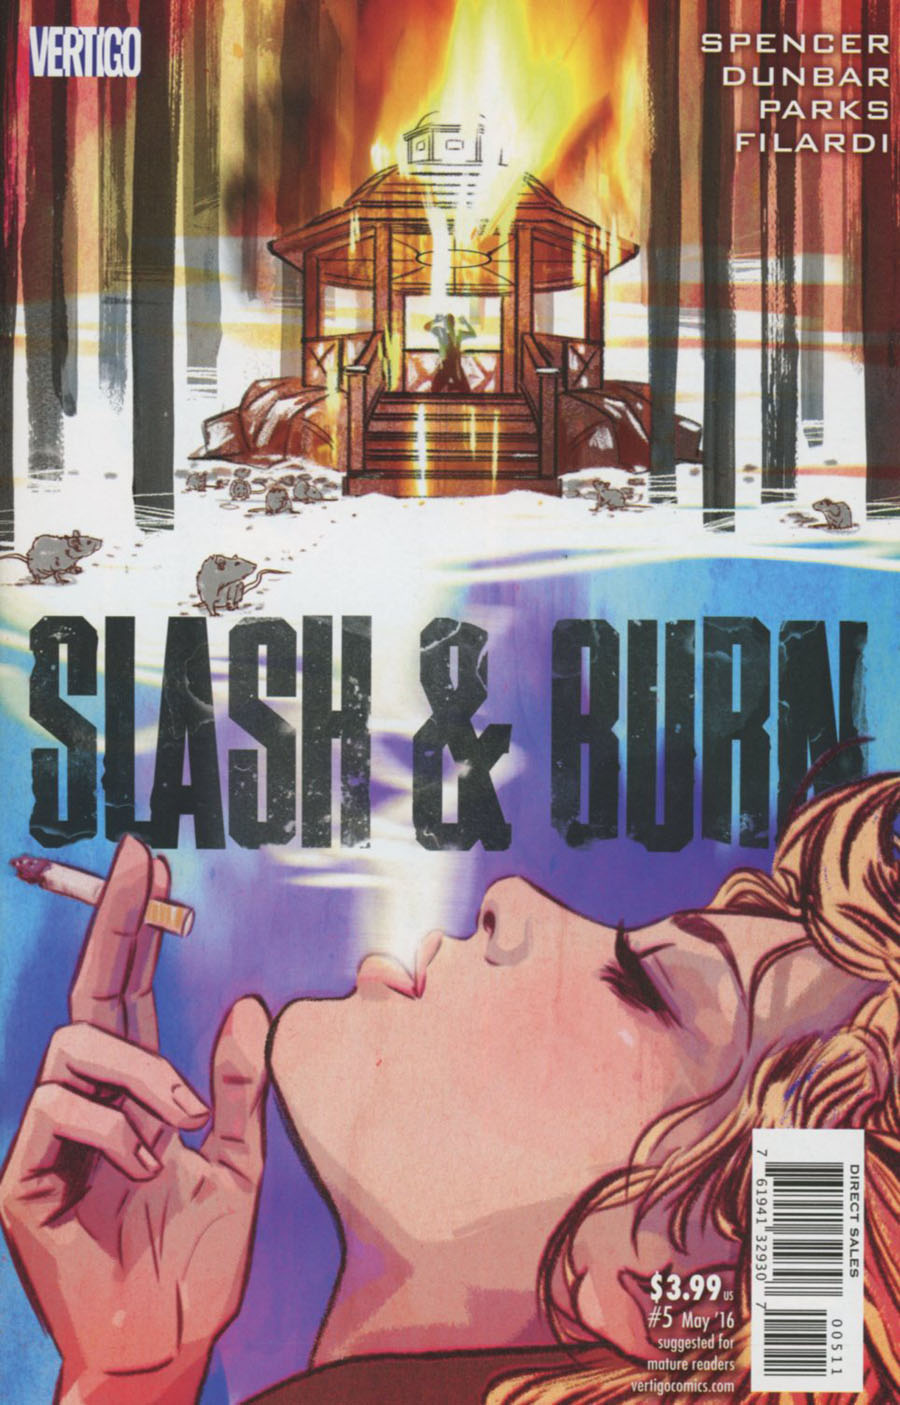 Slash & Burn #5